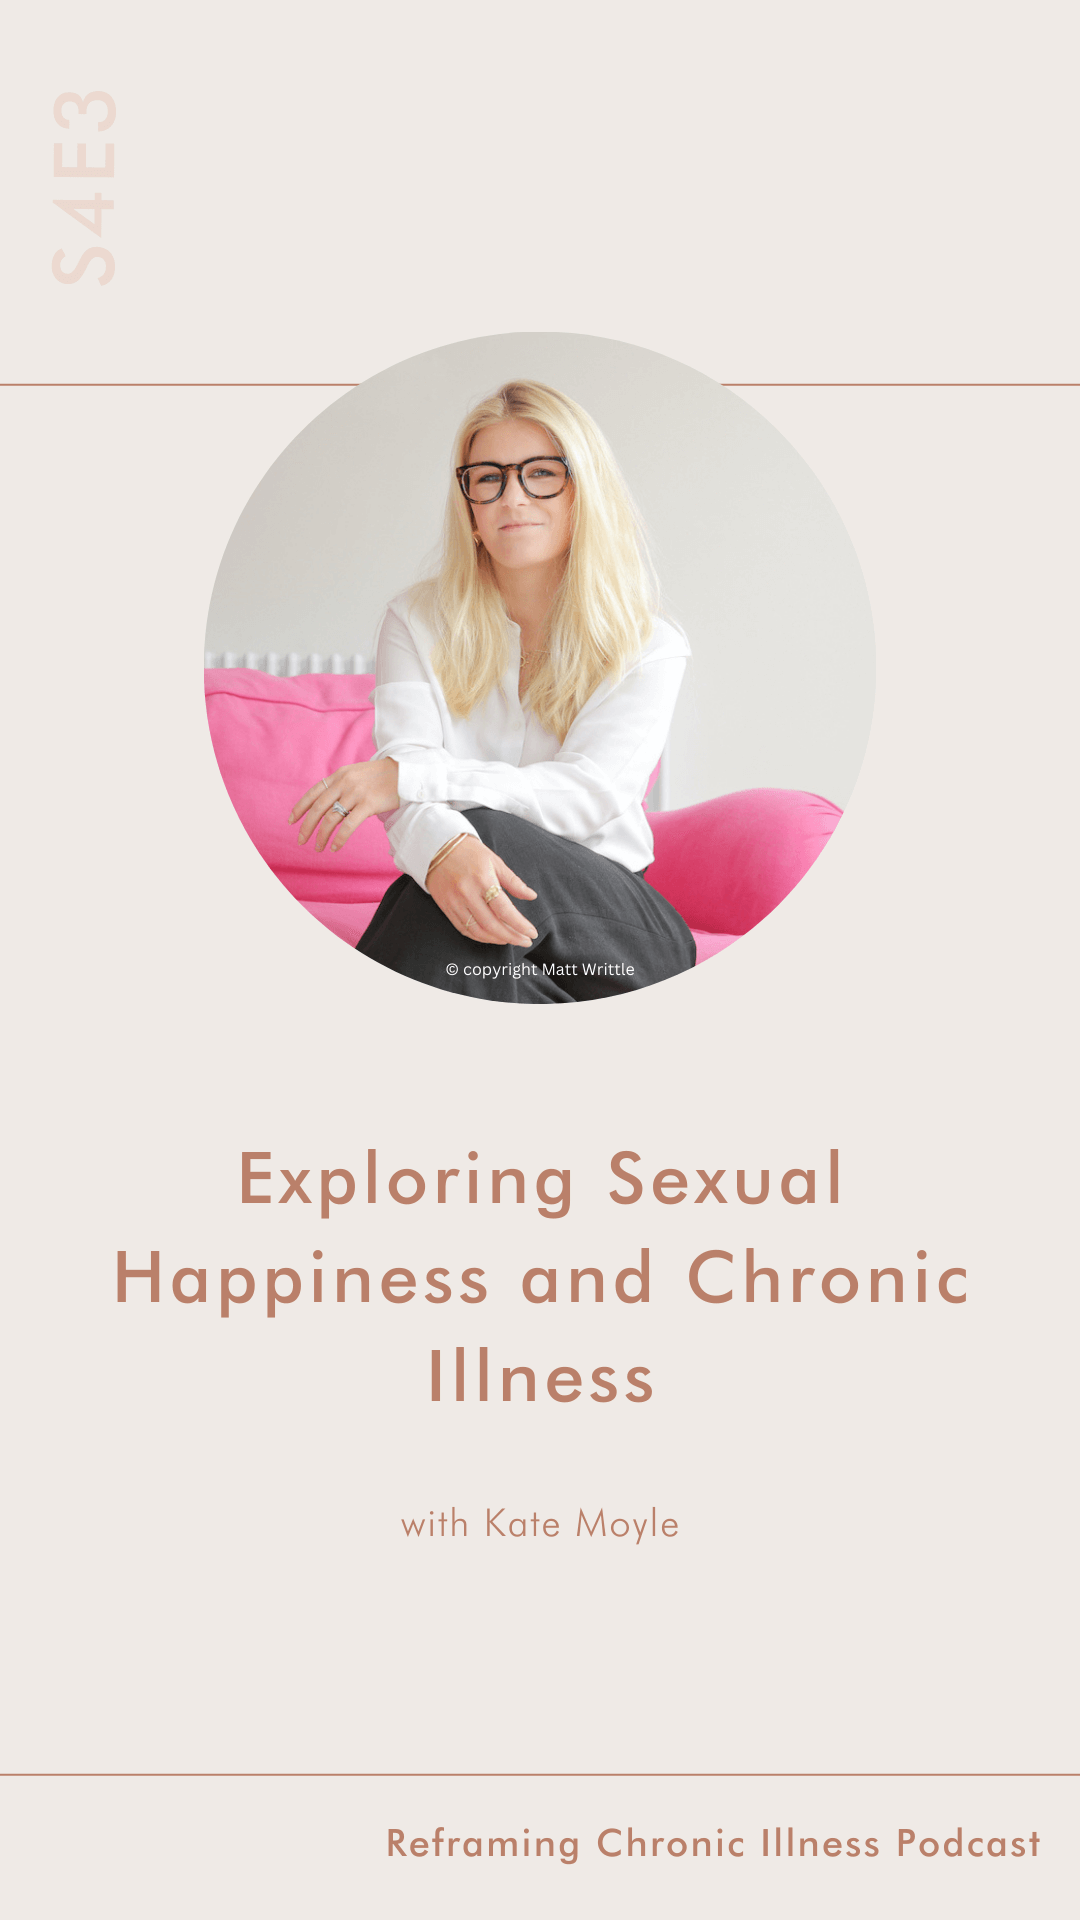 Kate Moyle Psychosexual Relationship Therapist - Alana Holloway Chronic Illness Coach - Reframing Chronic Illness - exploring Sexual Happiness and Chronic Illness1.png